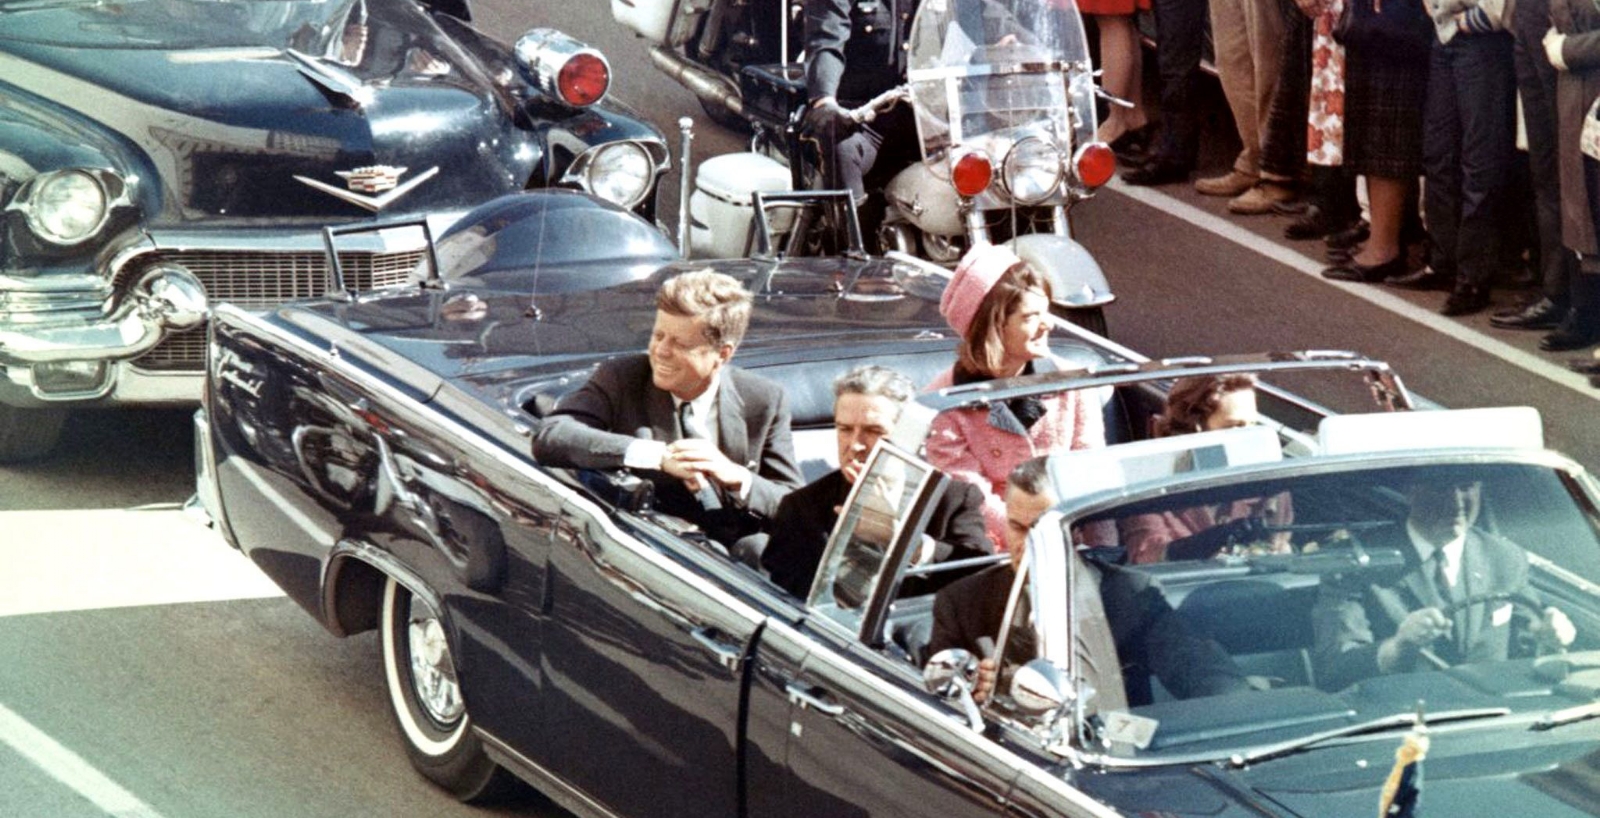 Joe Biden desclasifica miles de documentos sobre el asesinato de Kennedy